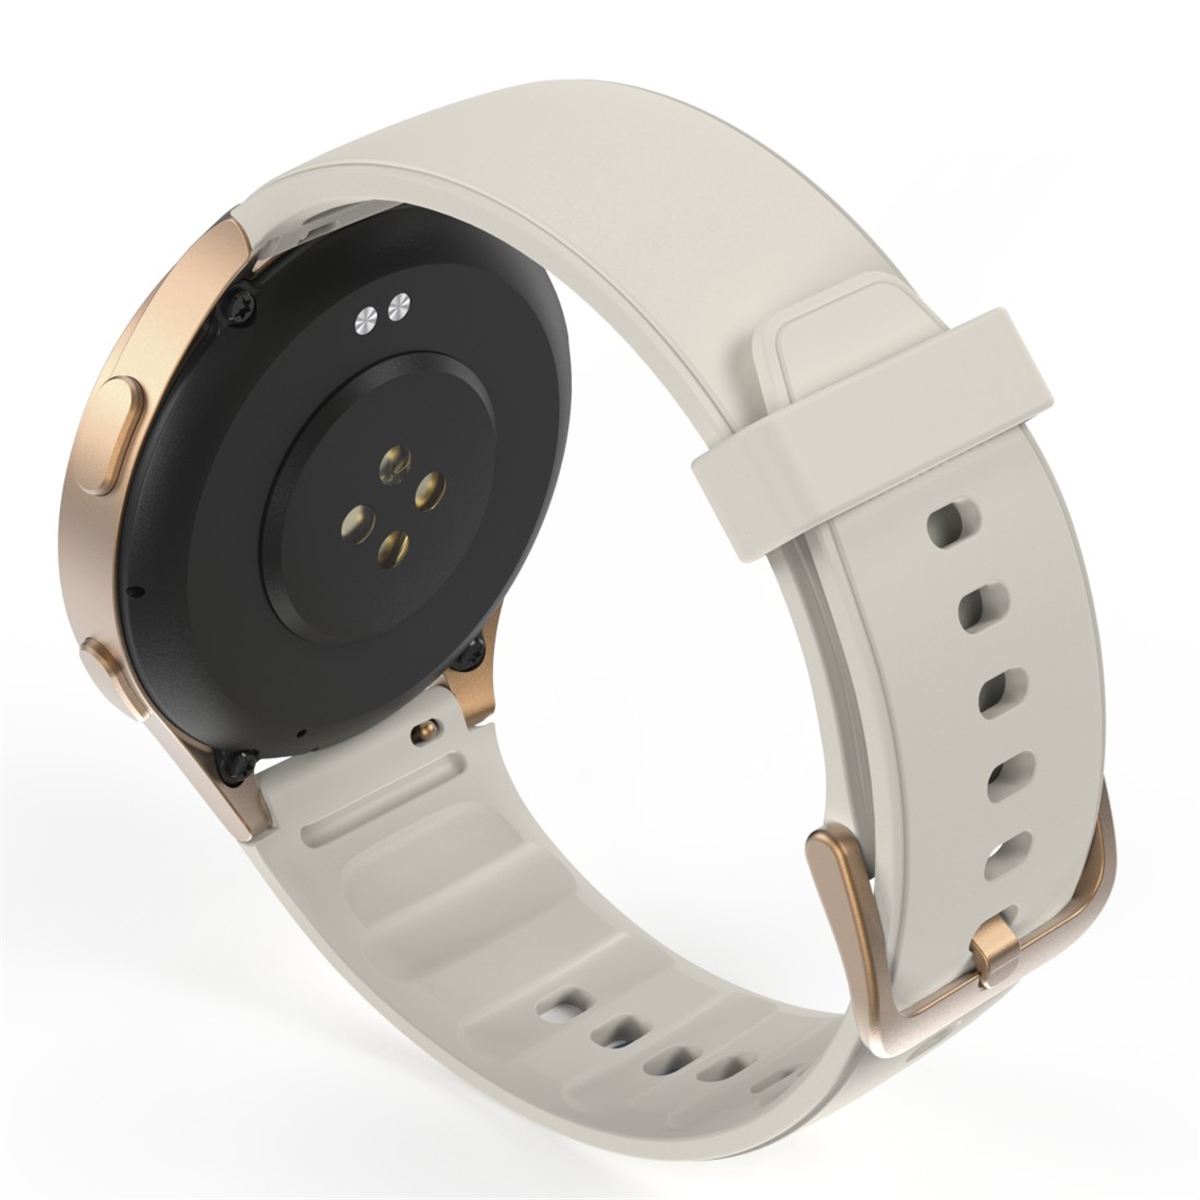 Hama Bluetooth Smartwatch 8900 mit Telefonfunktion 1,32“ AMOLED Display  Gold | eBay